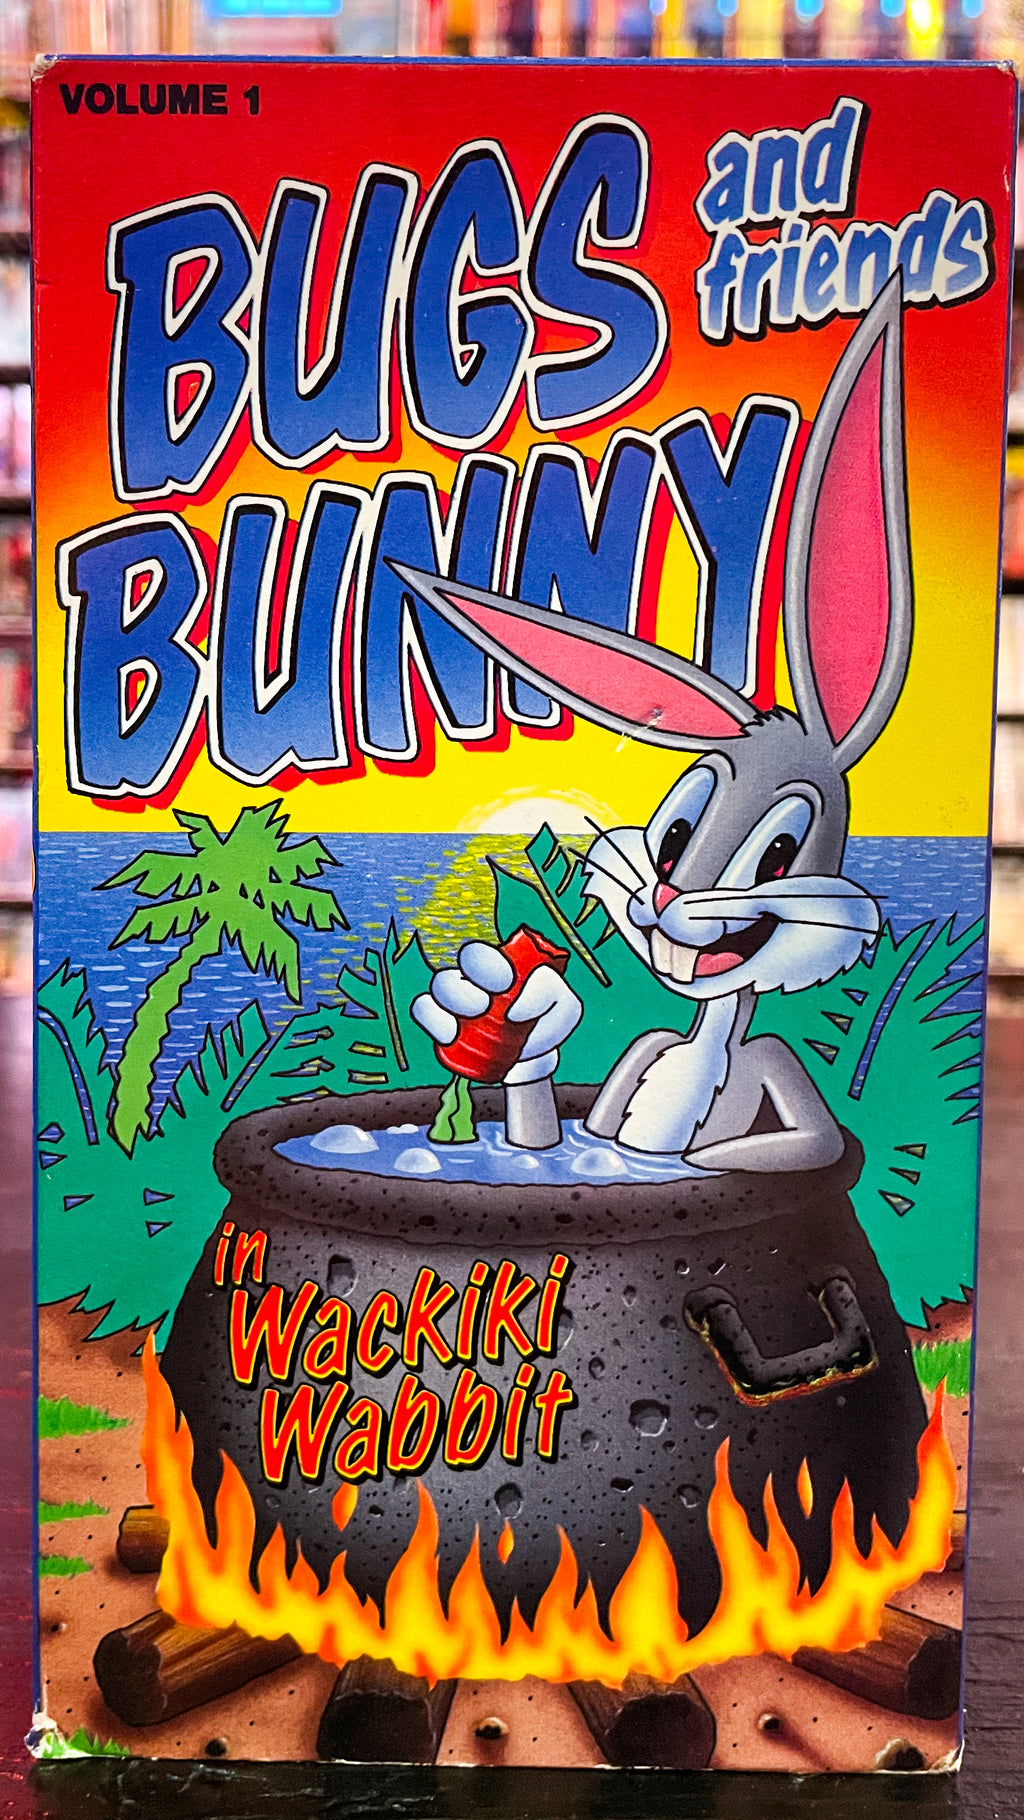 Bugs Bunny and Friends is Wackiki Wabbit